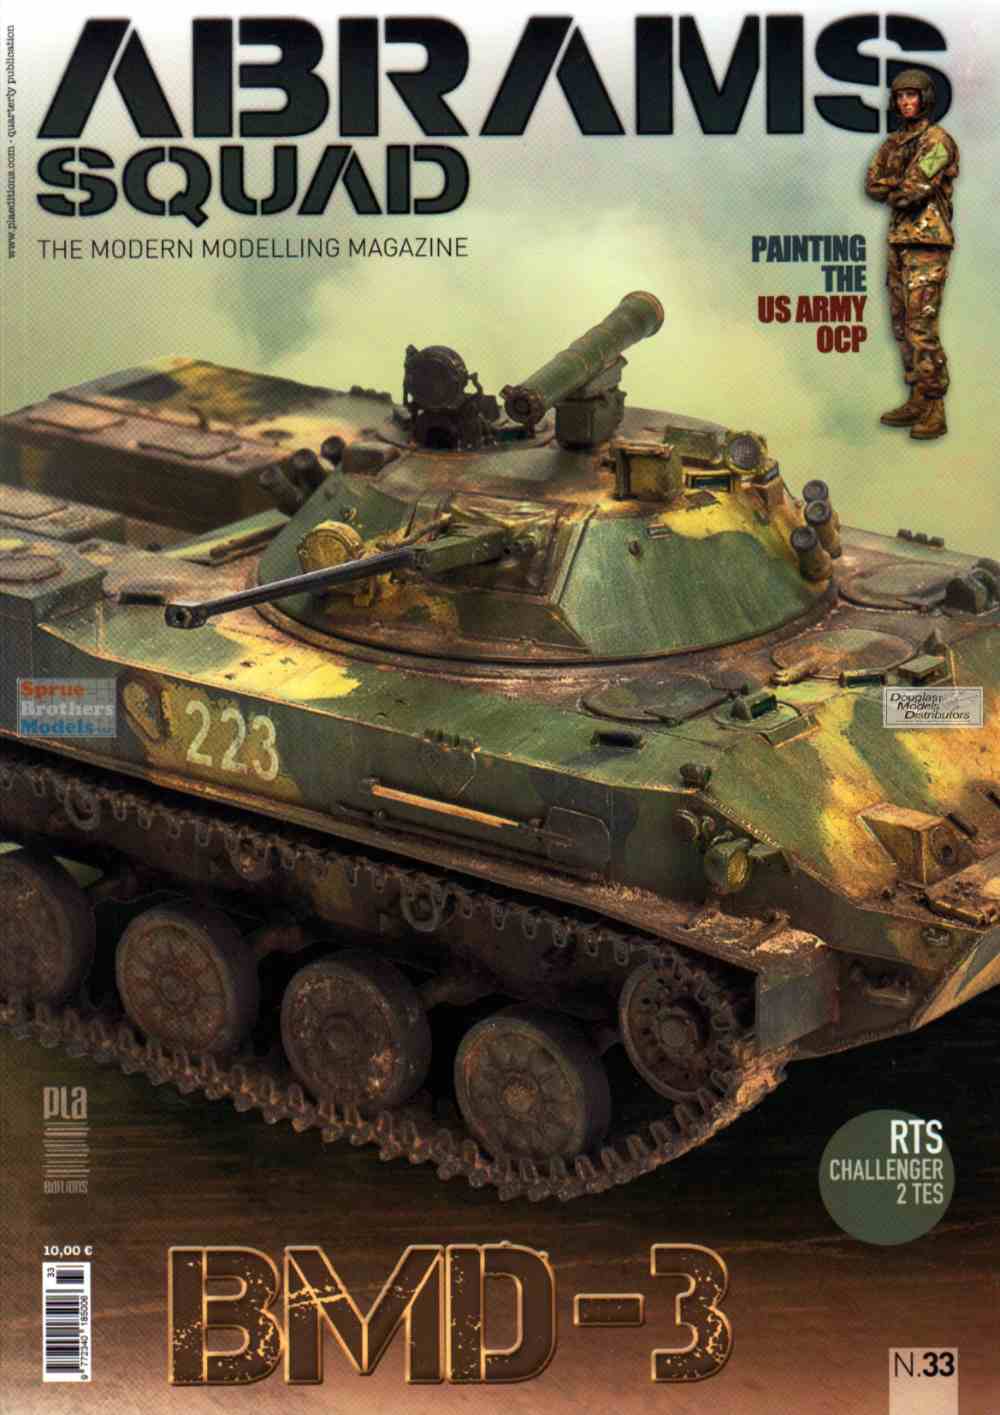 English Version Abrams Squad Magazine Issue 6 Pla Editions 